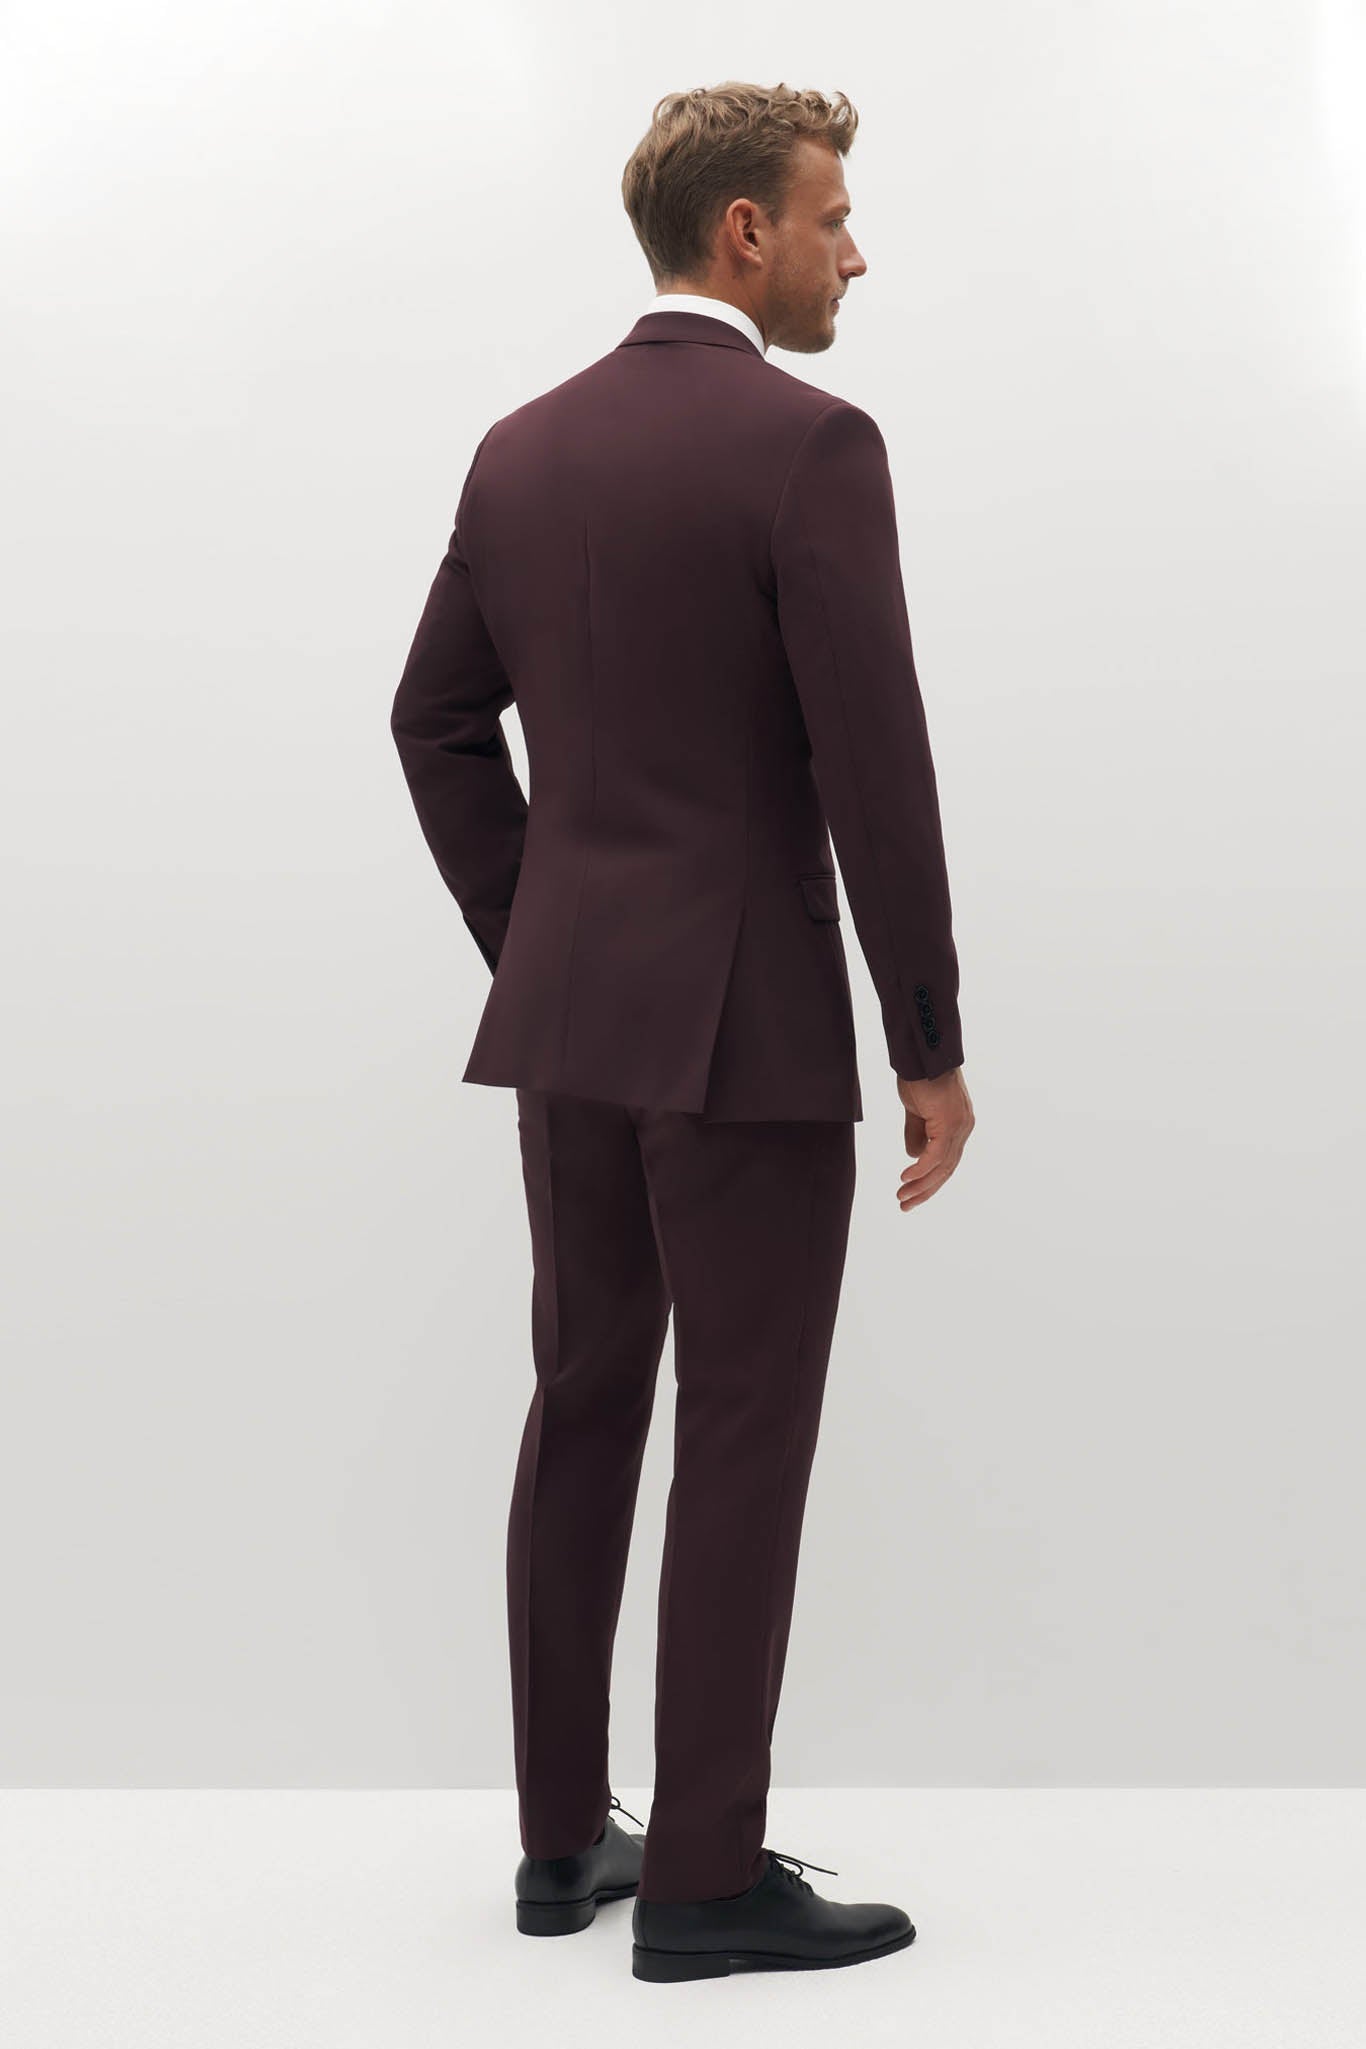 ASOS DESIGN wedding super skinny suit trousers in burgundy micro texture   ASOS